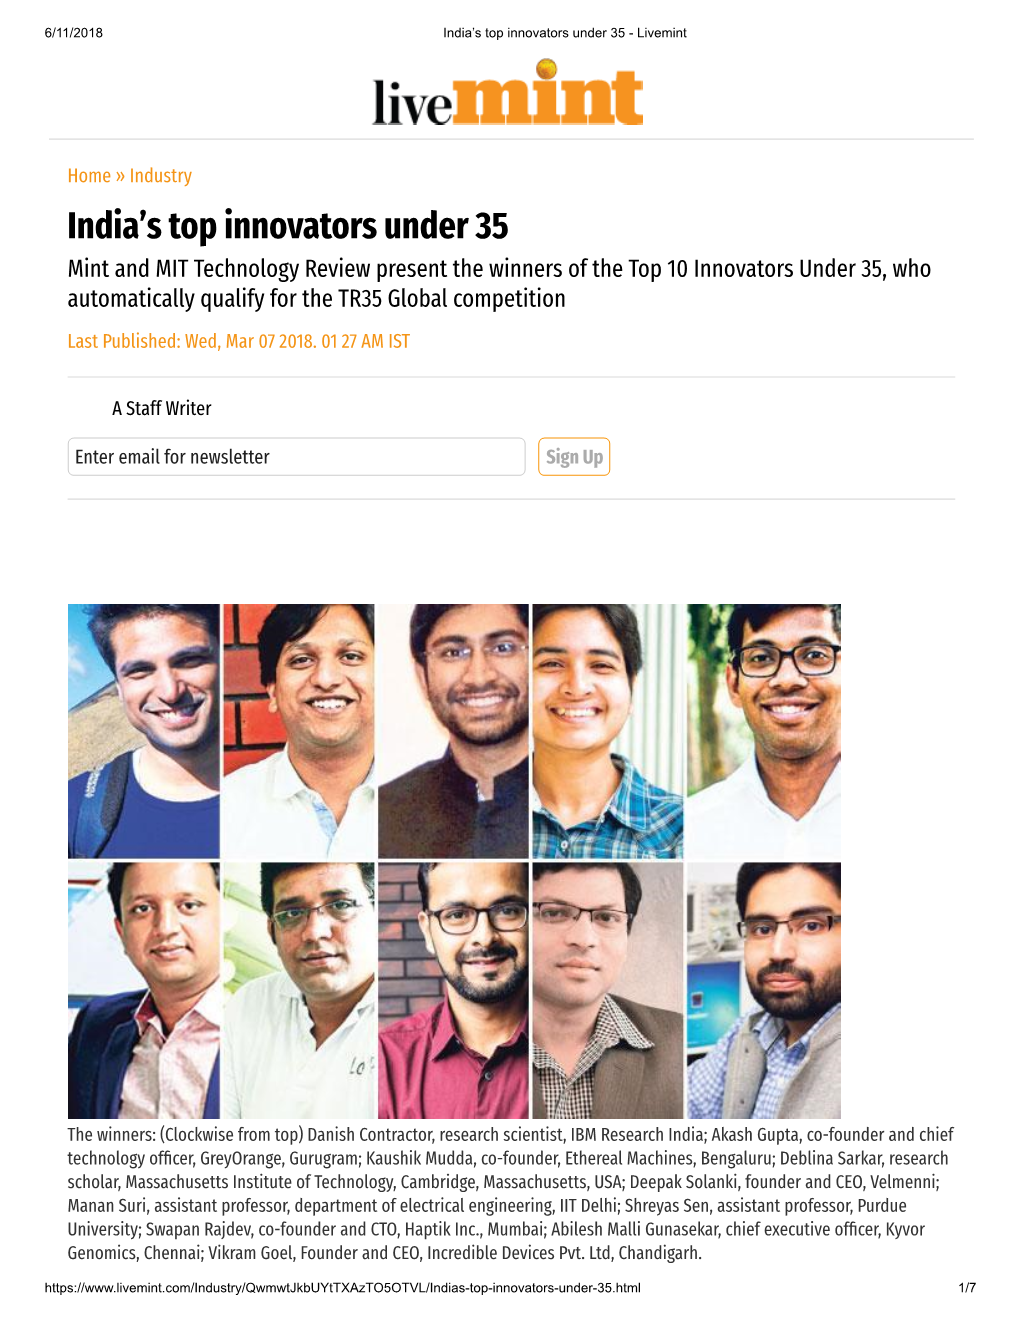 India's Top Innovators Under 35